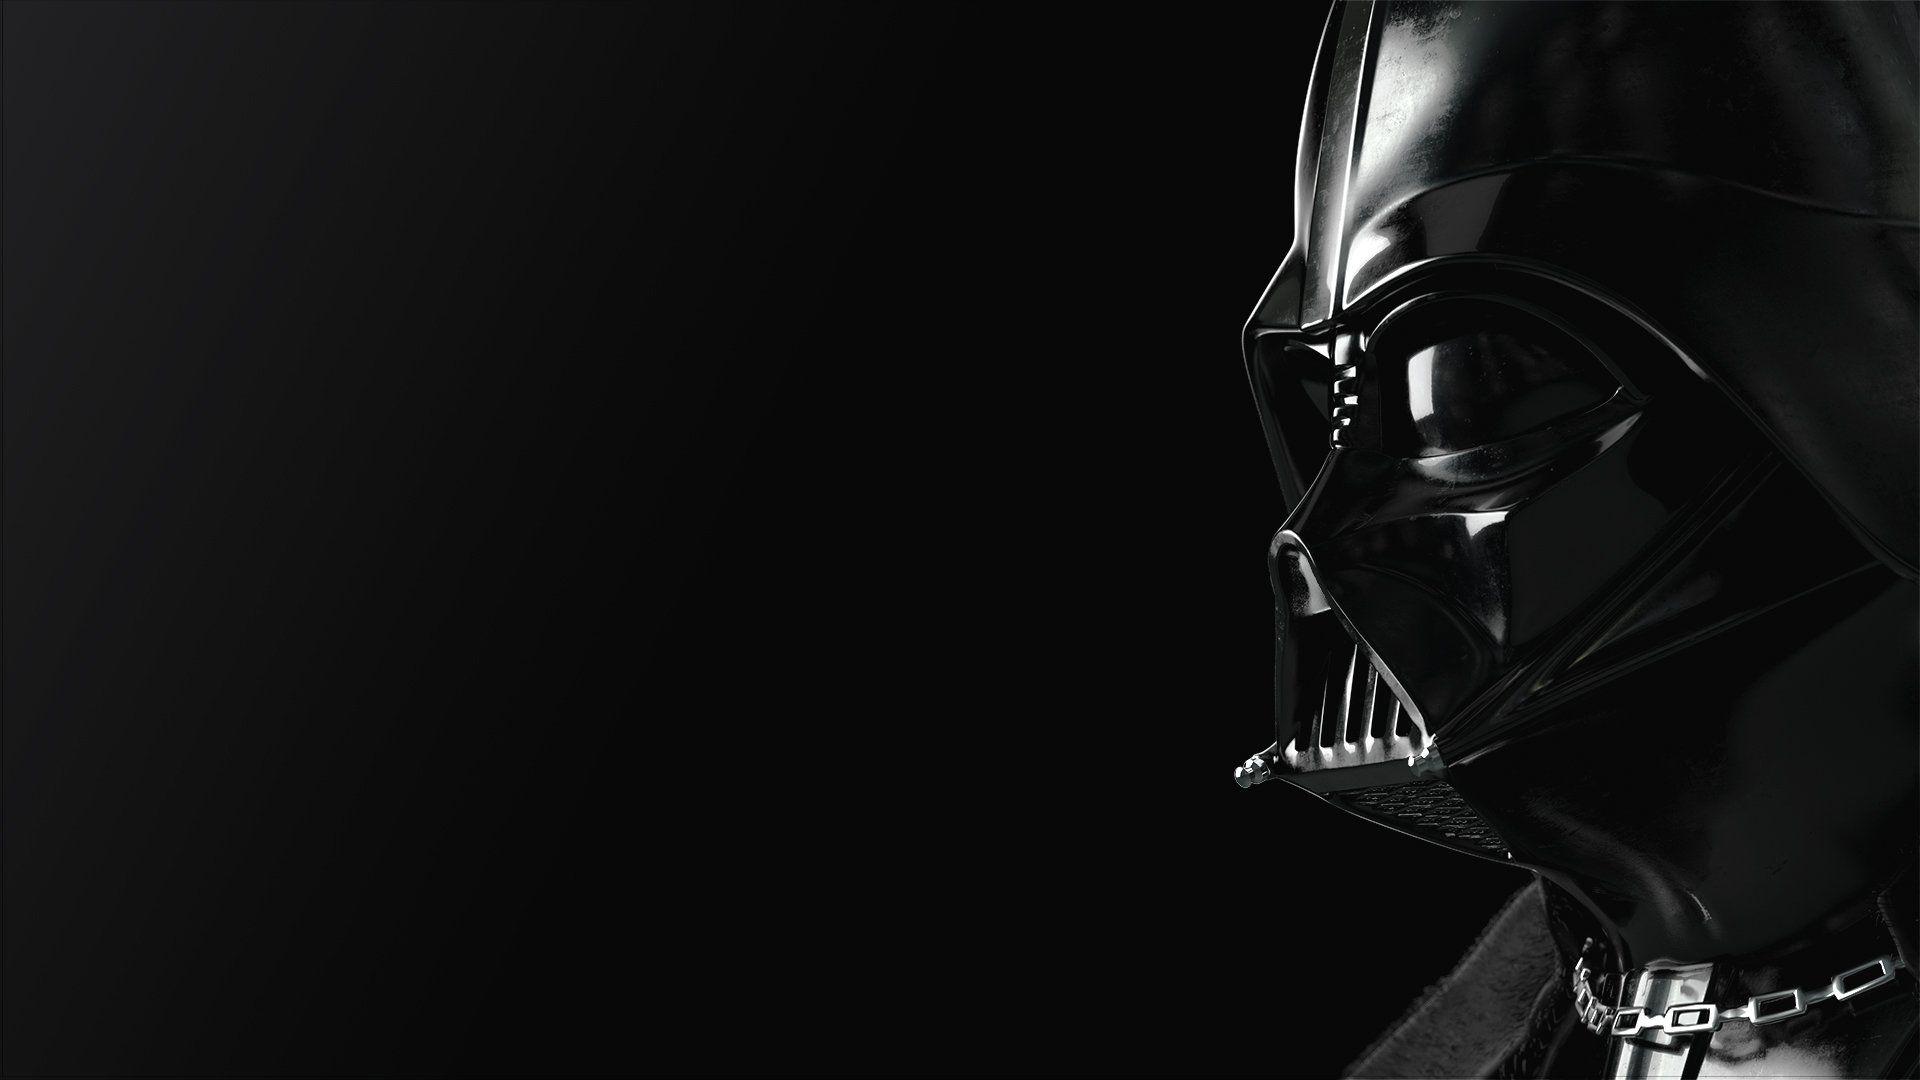 Dark Star Wars Wallpapers - Top Free Dark Star Wars Backgrounds